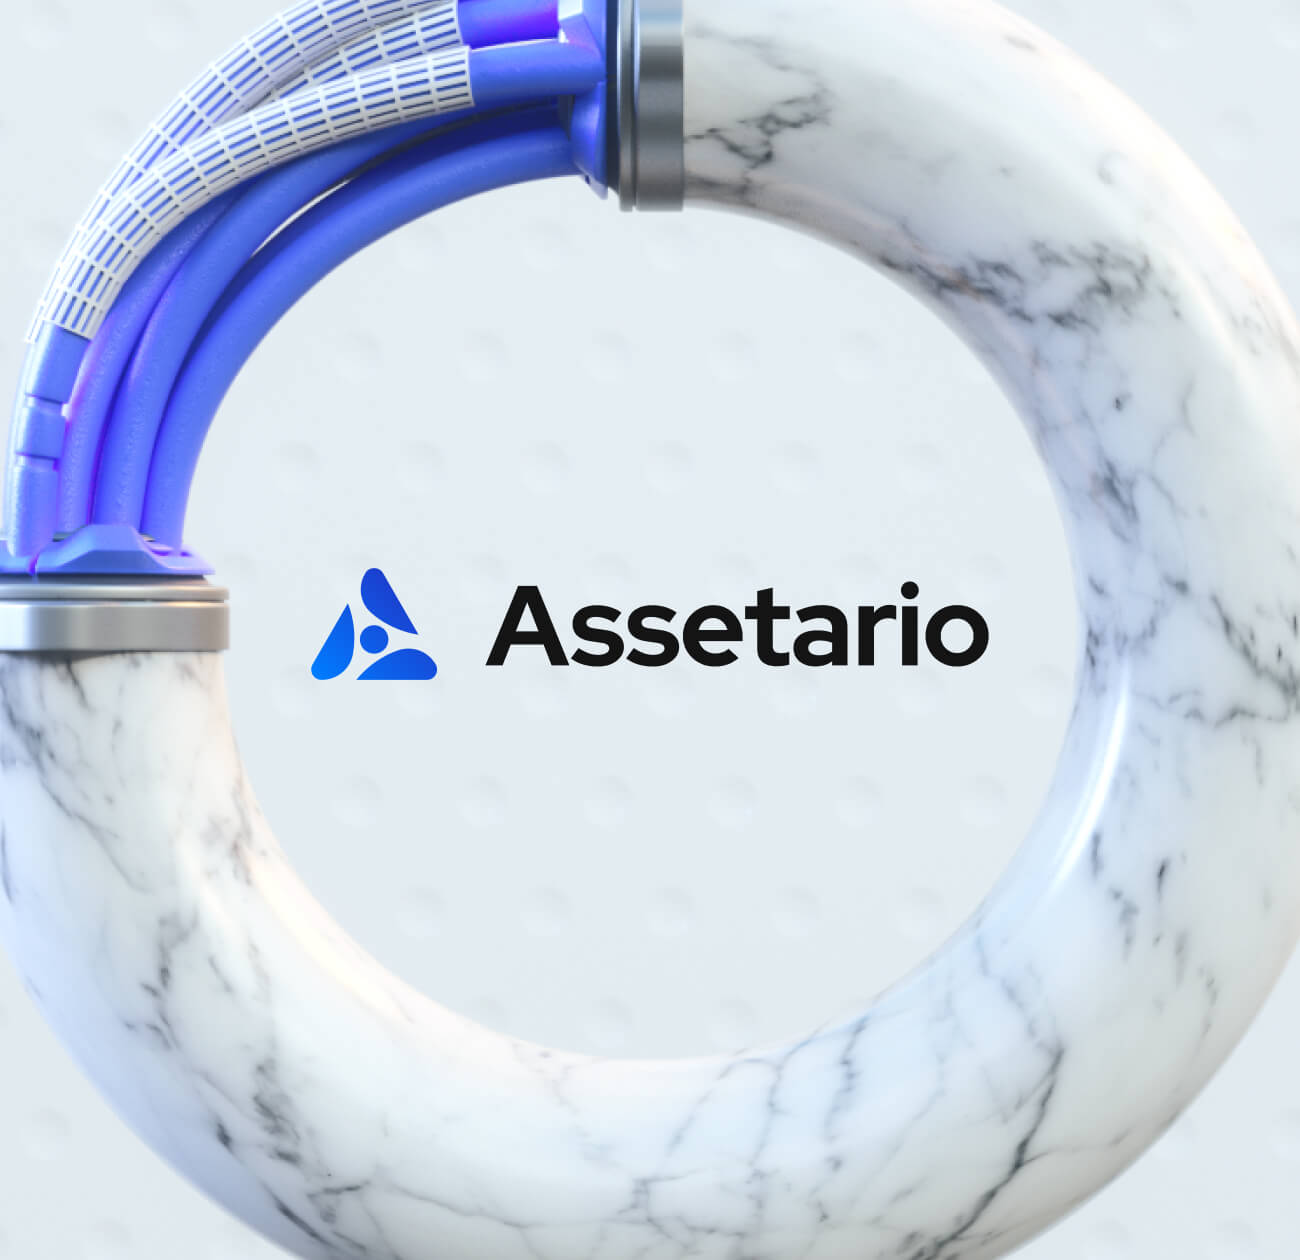 Assetario – Branding for the SaaS platform - Website Development - Photo 1